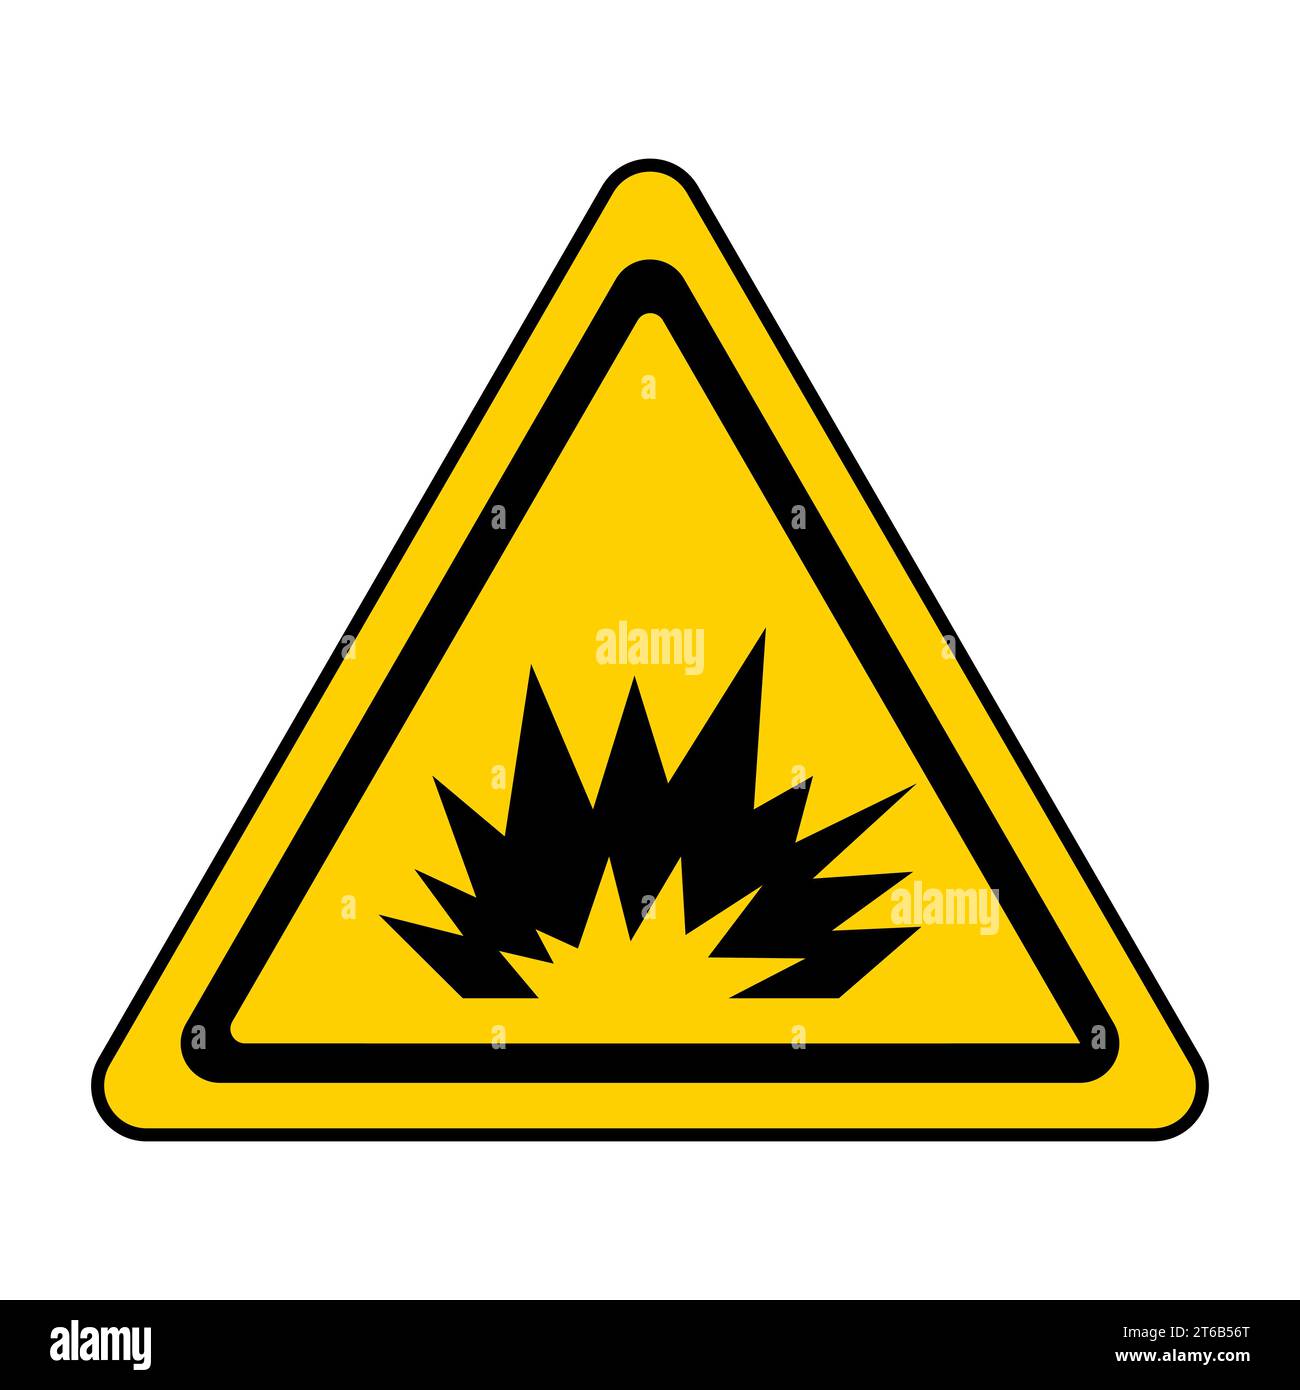 Warning sign caution explosion, triangular sign explosion indicating blasting operations Stock Vector